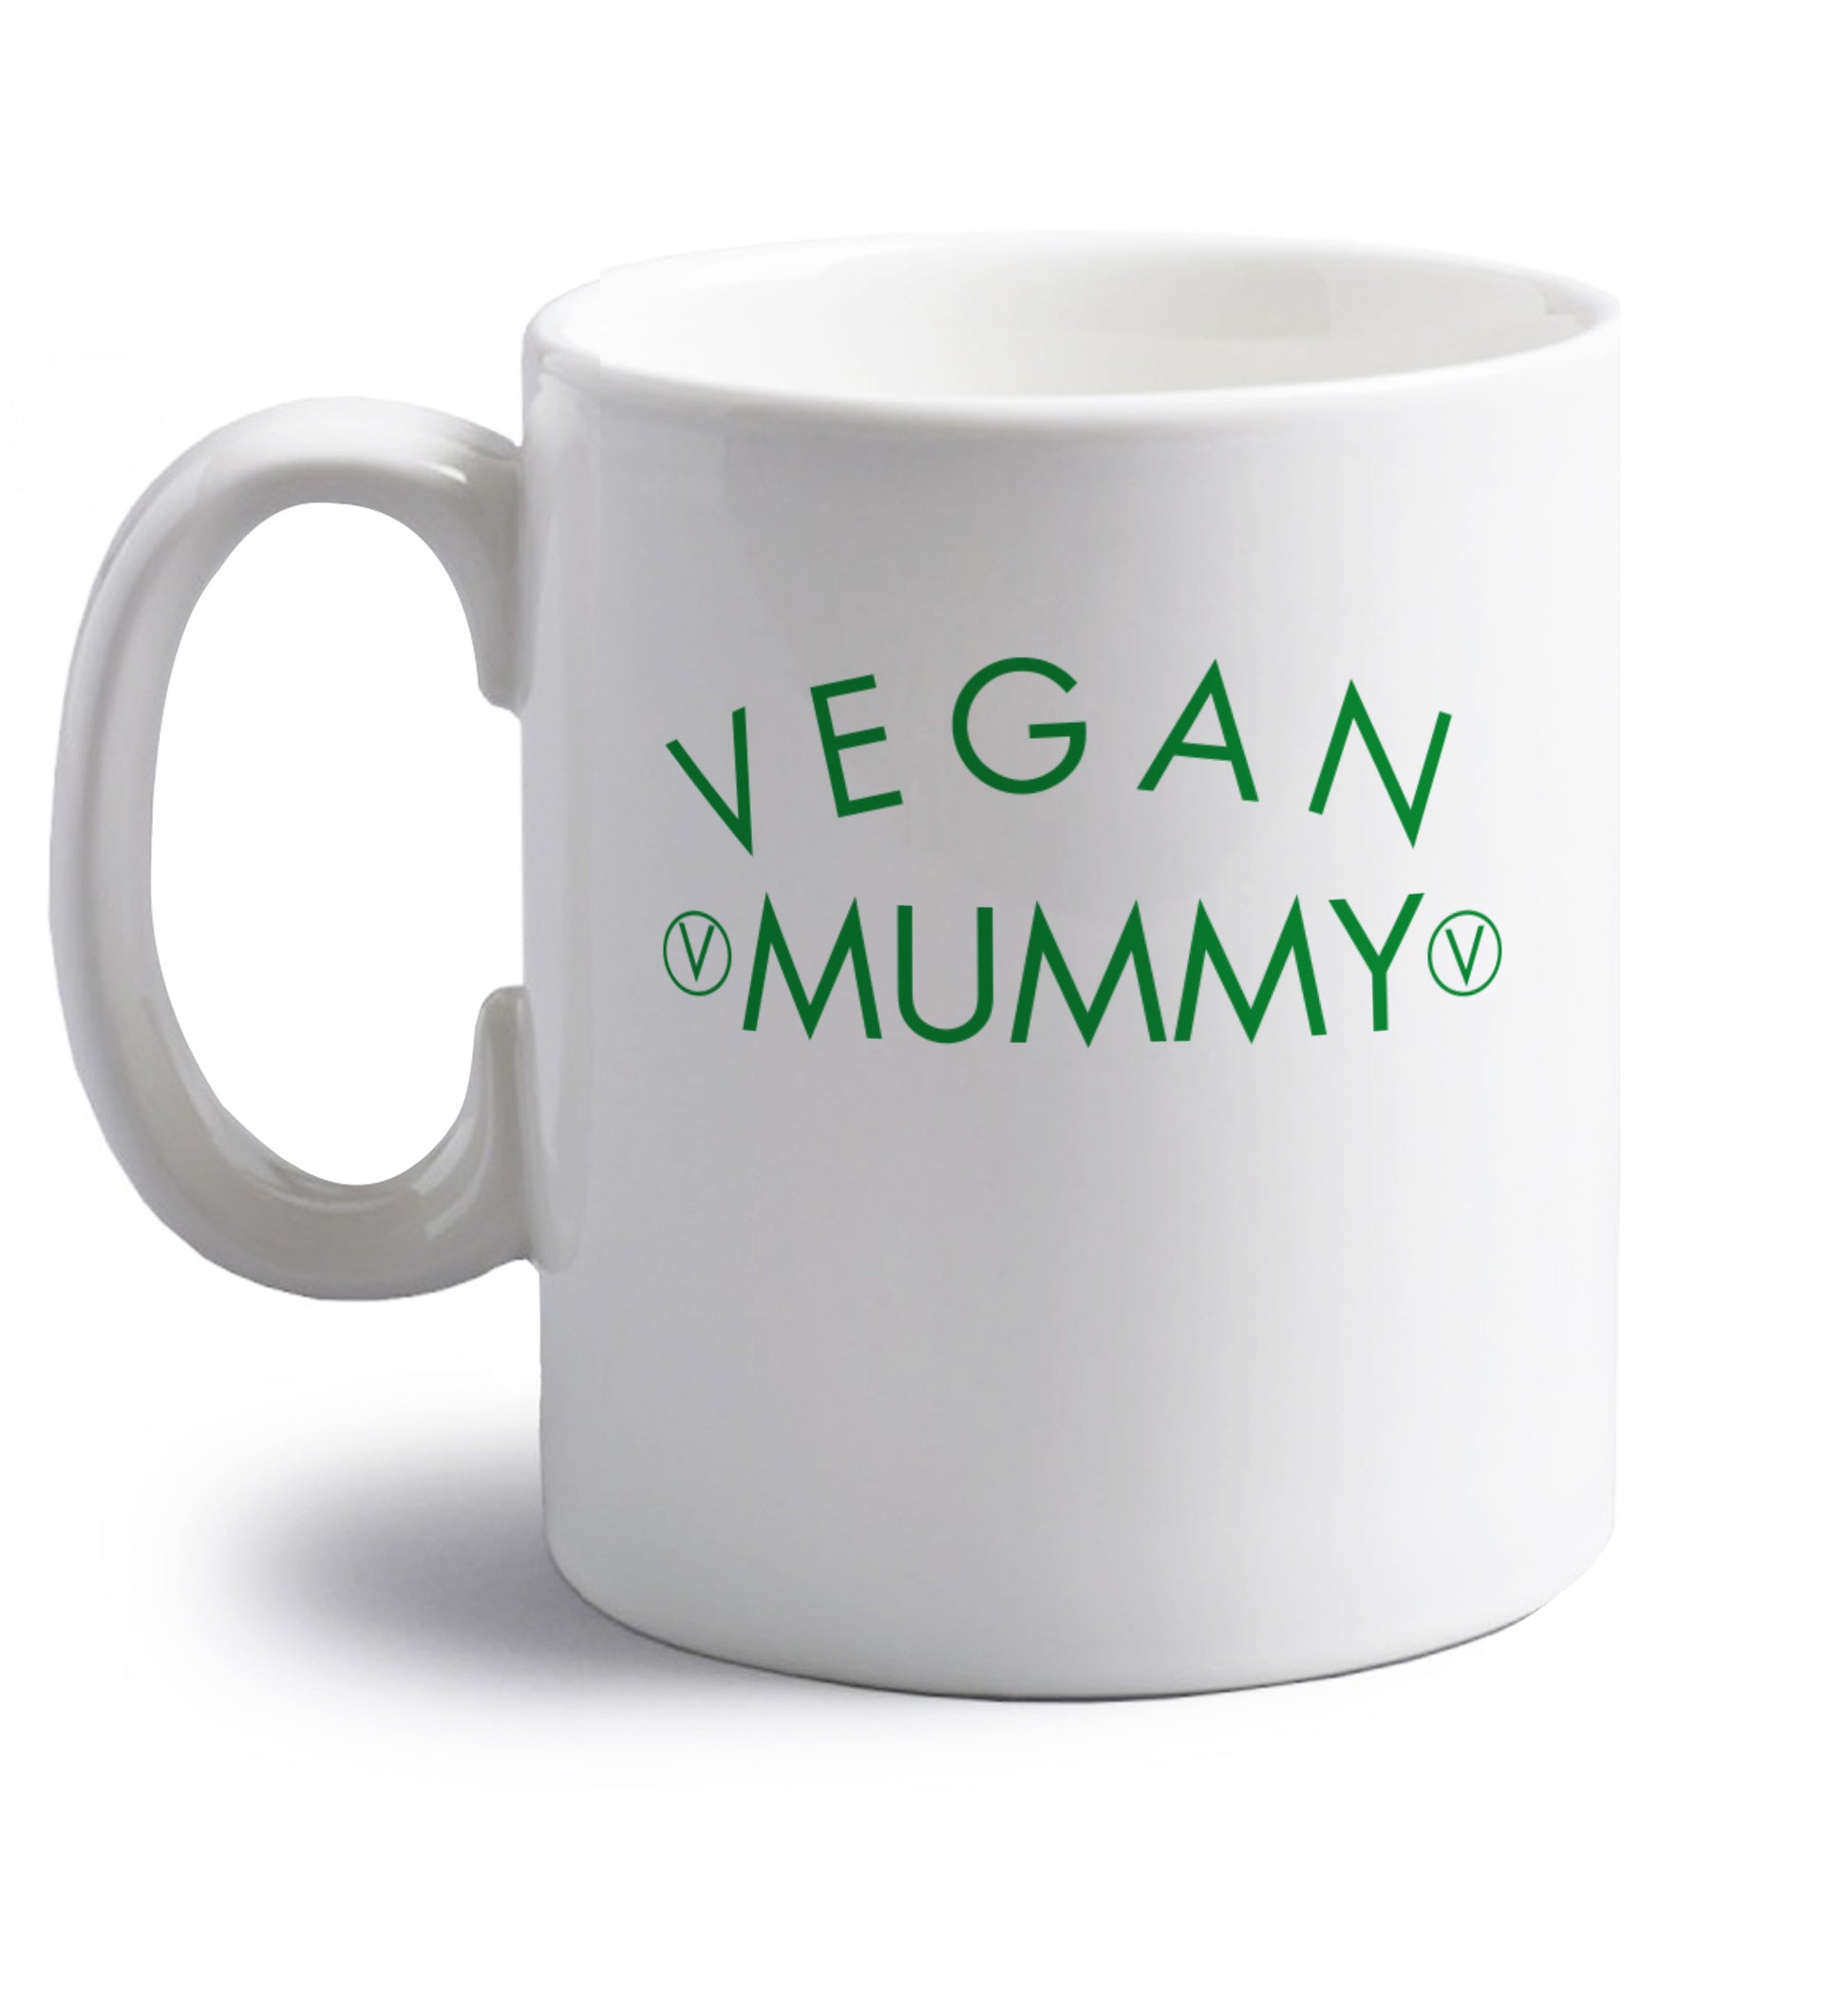 Vegan mummy right handed white ceramic mug 